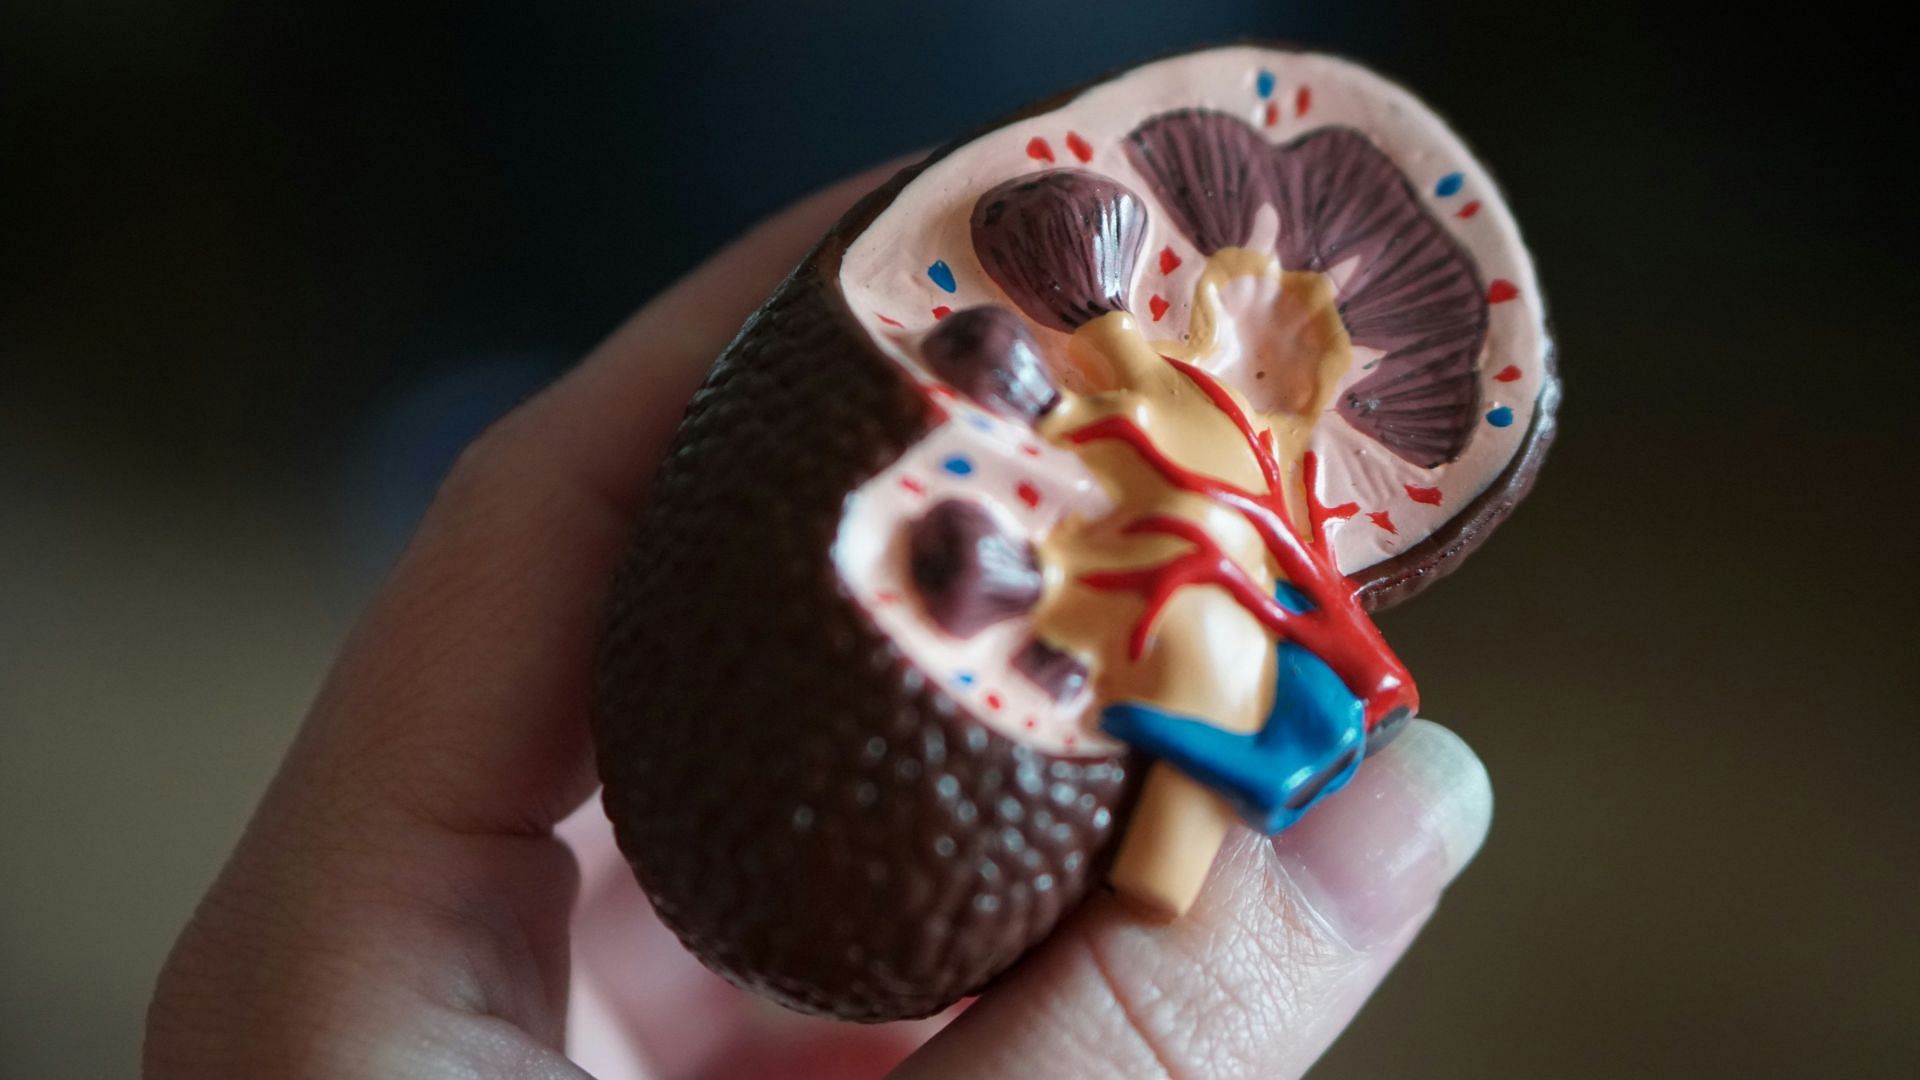 Sulforaphane supplements can improve kidney health (Image by Robina Weermeijer/Unsplash)